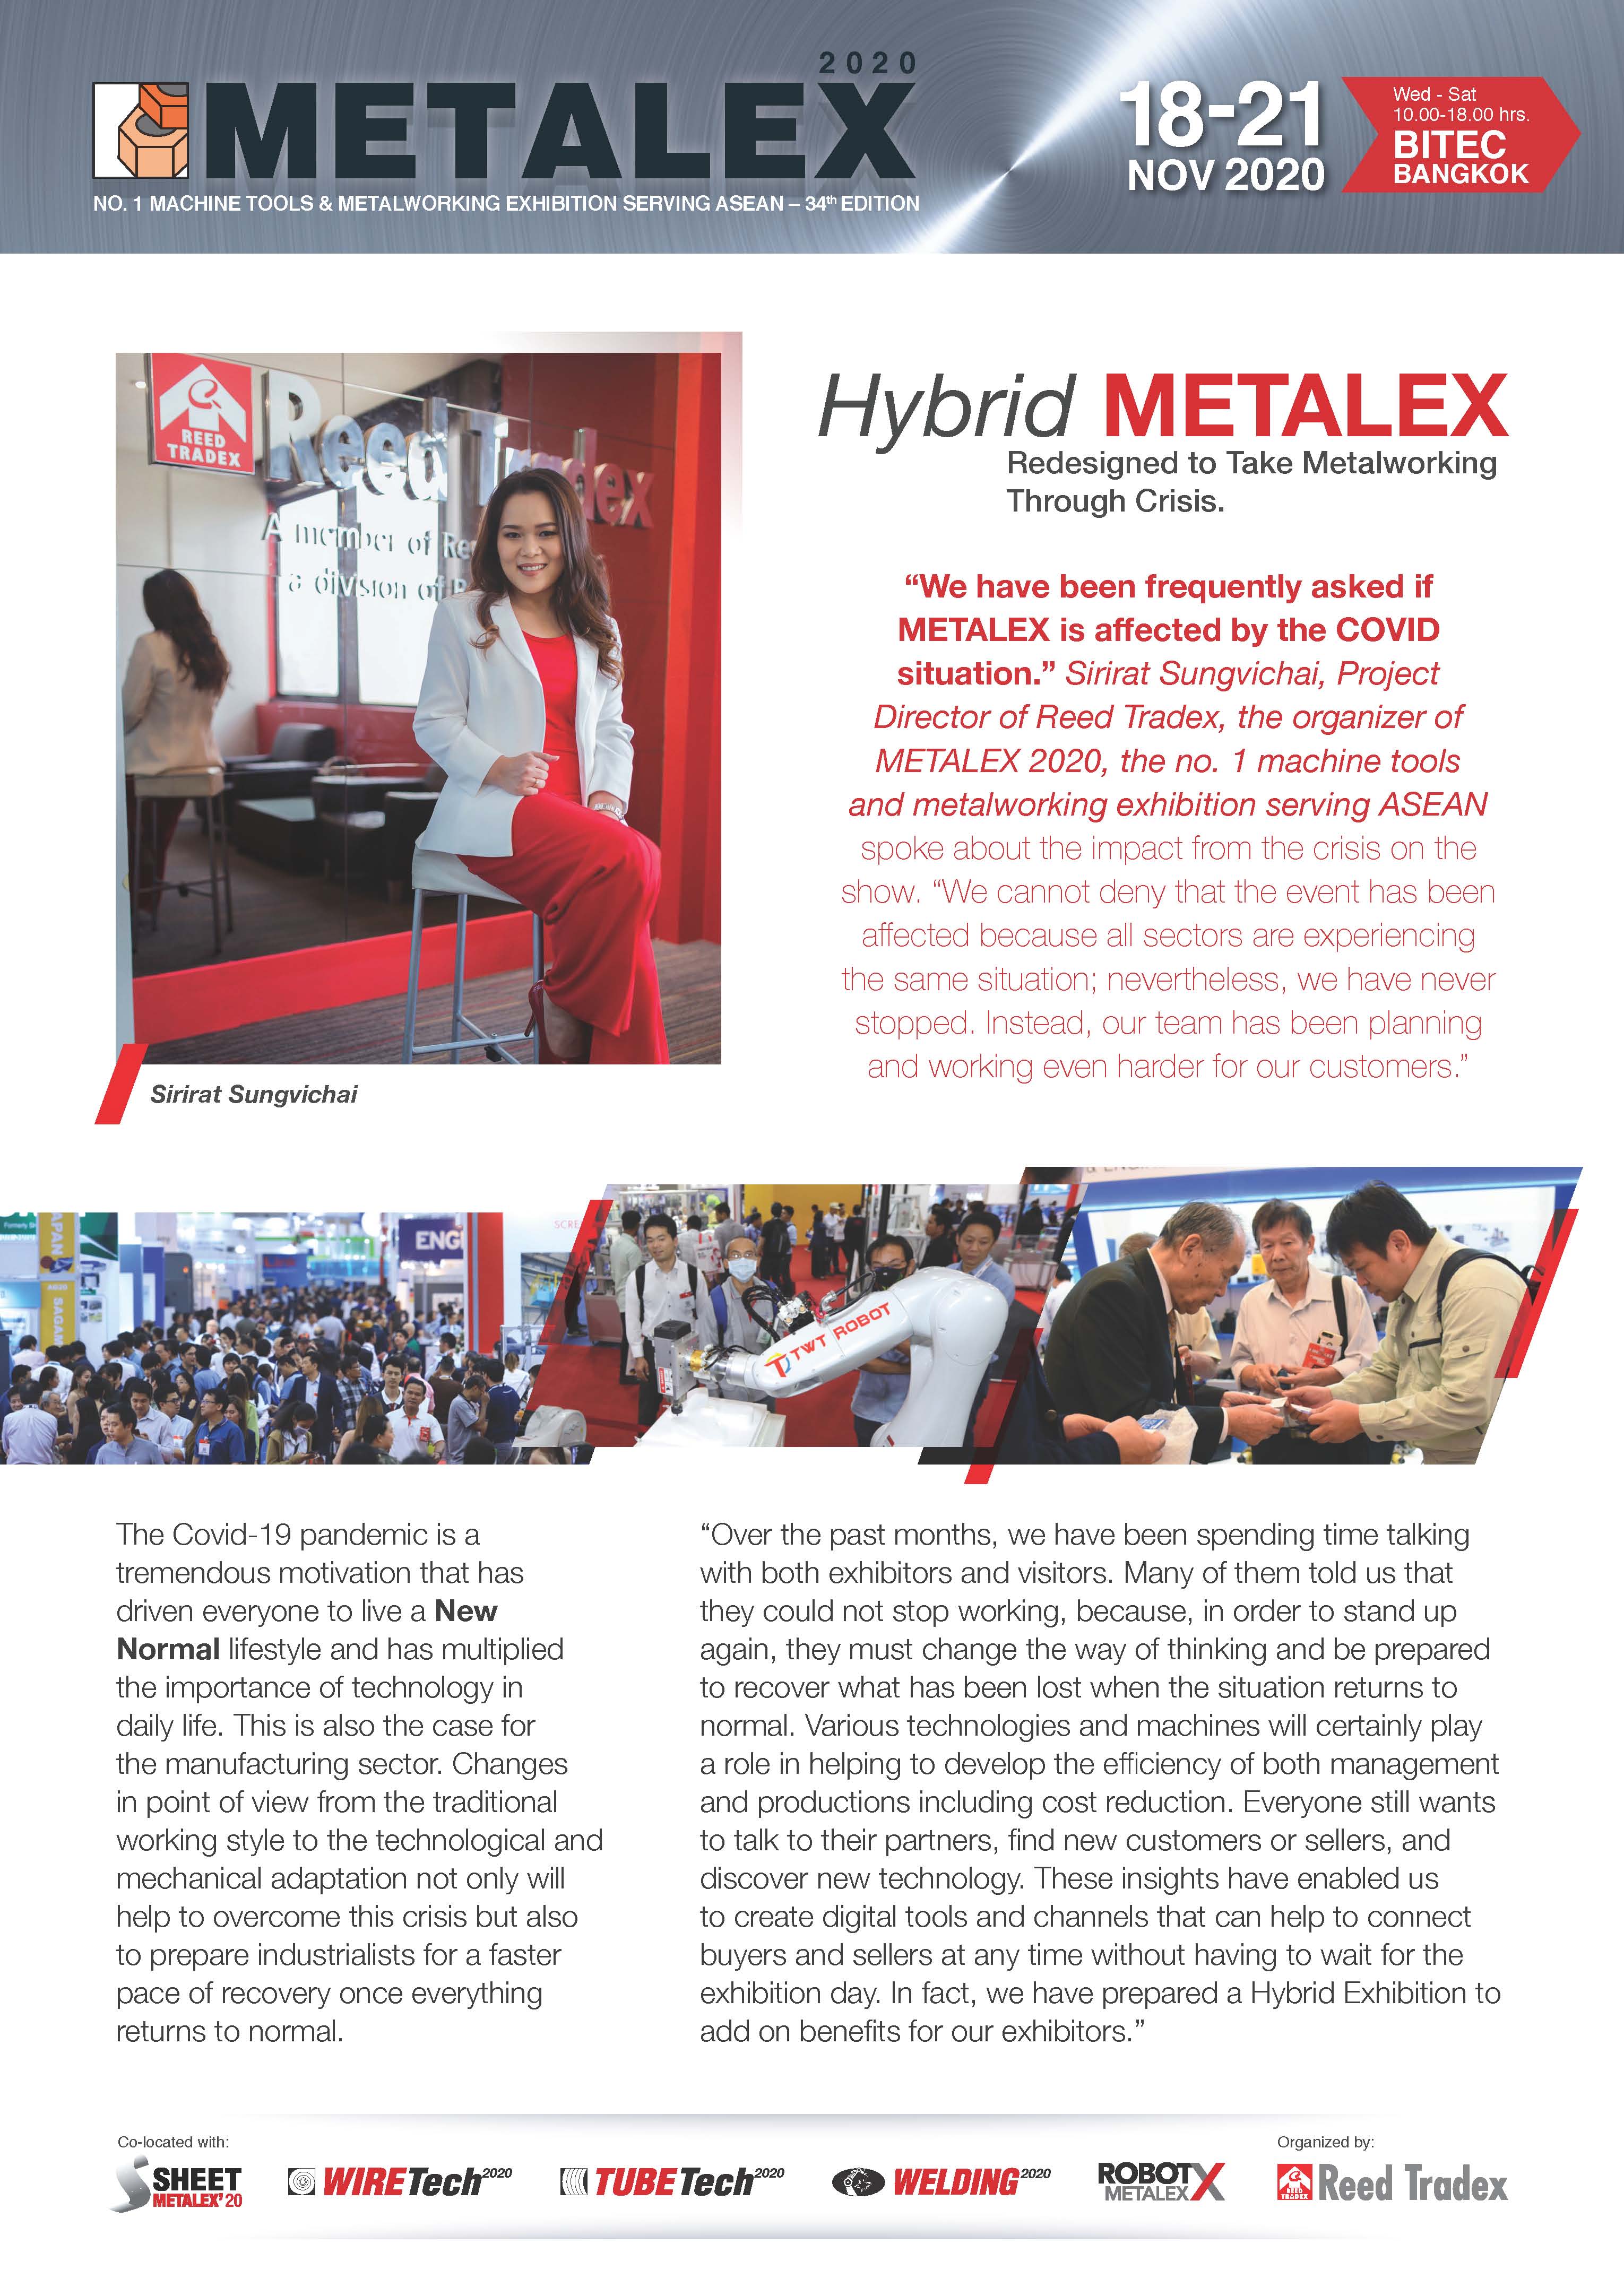 Hybrid METALEX Redesigned to Take Metalworking Through Crisis.